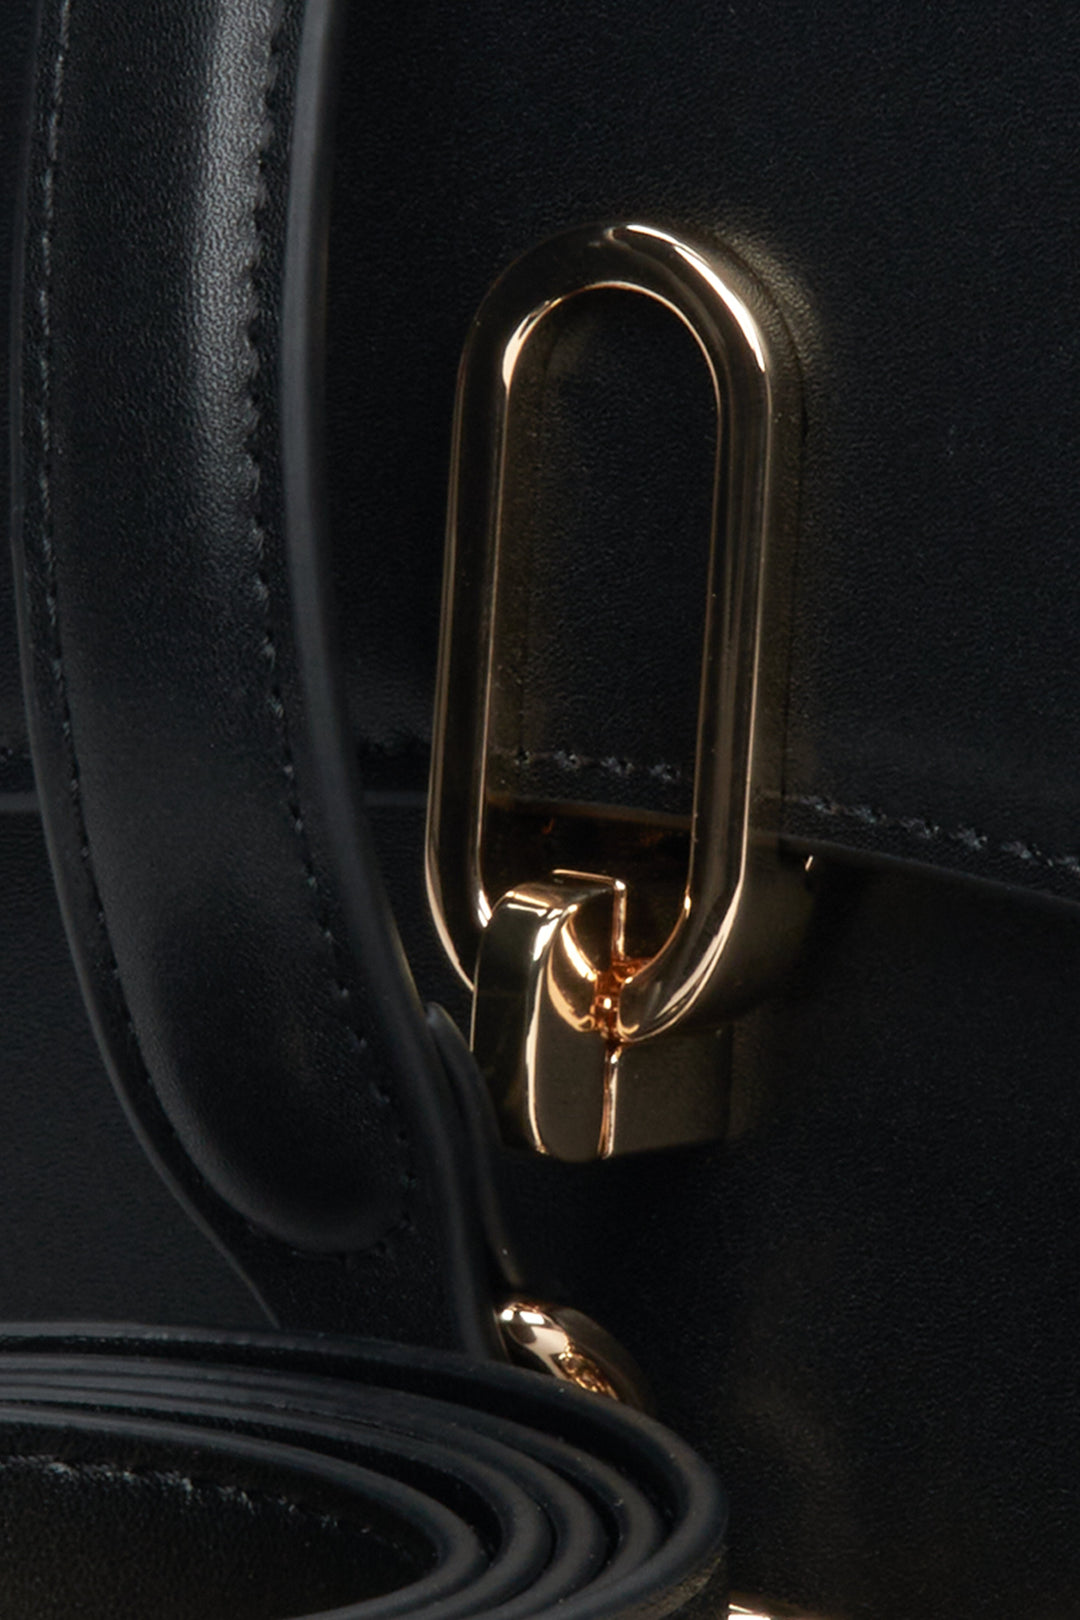 Stylish, black women's handbag Estro made of genuine leather - close-up on details.